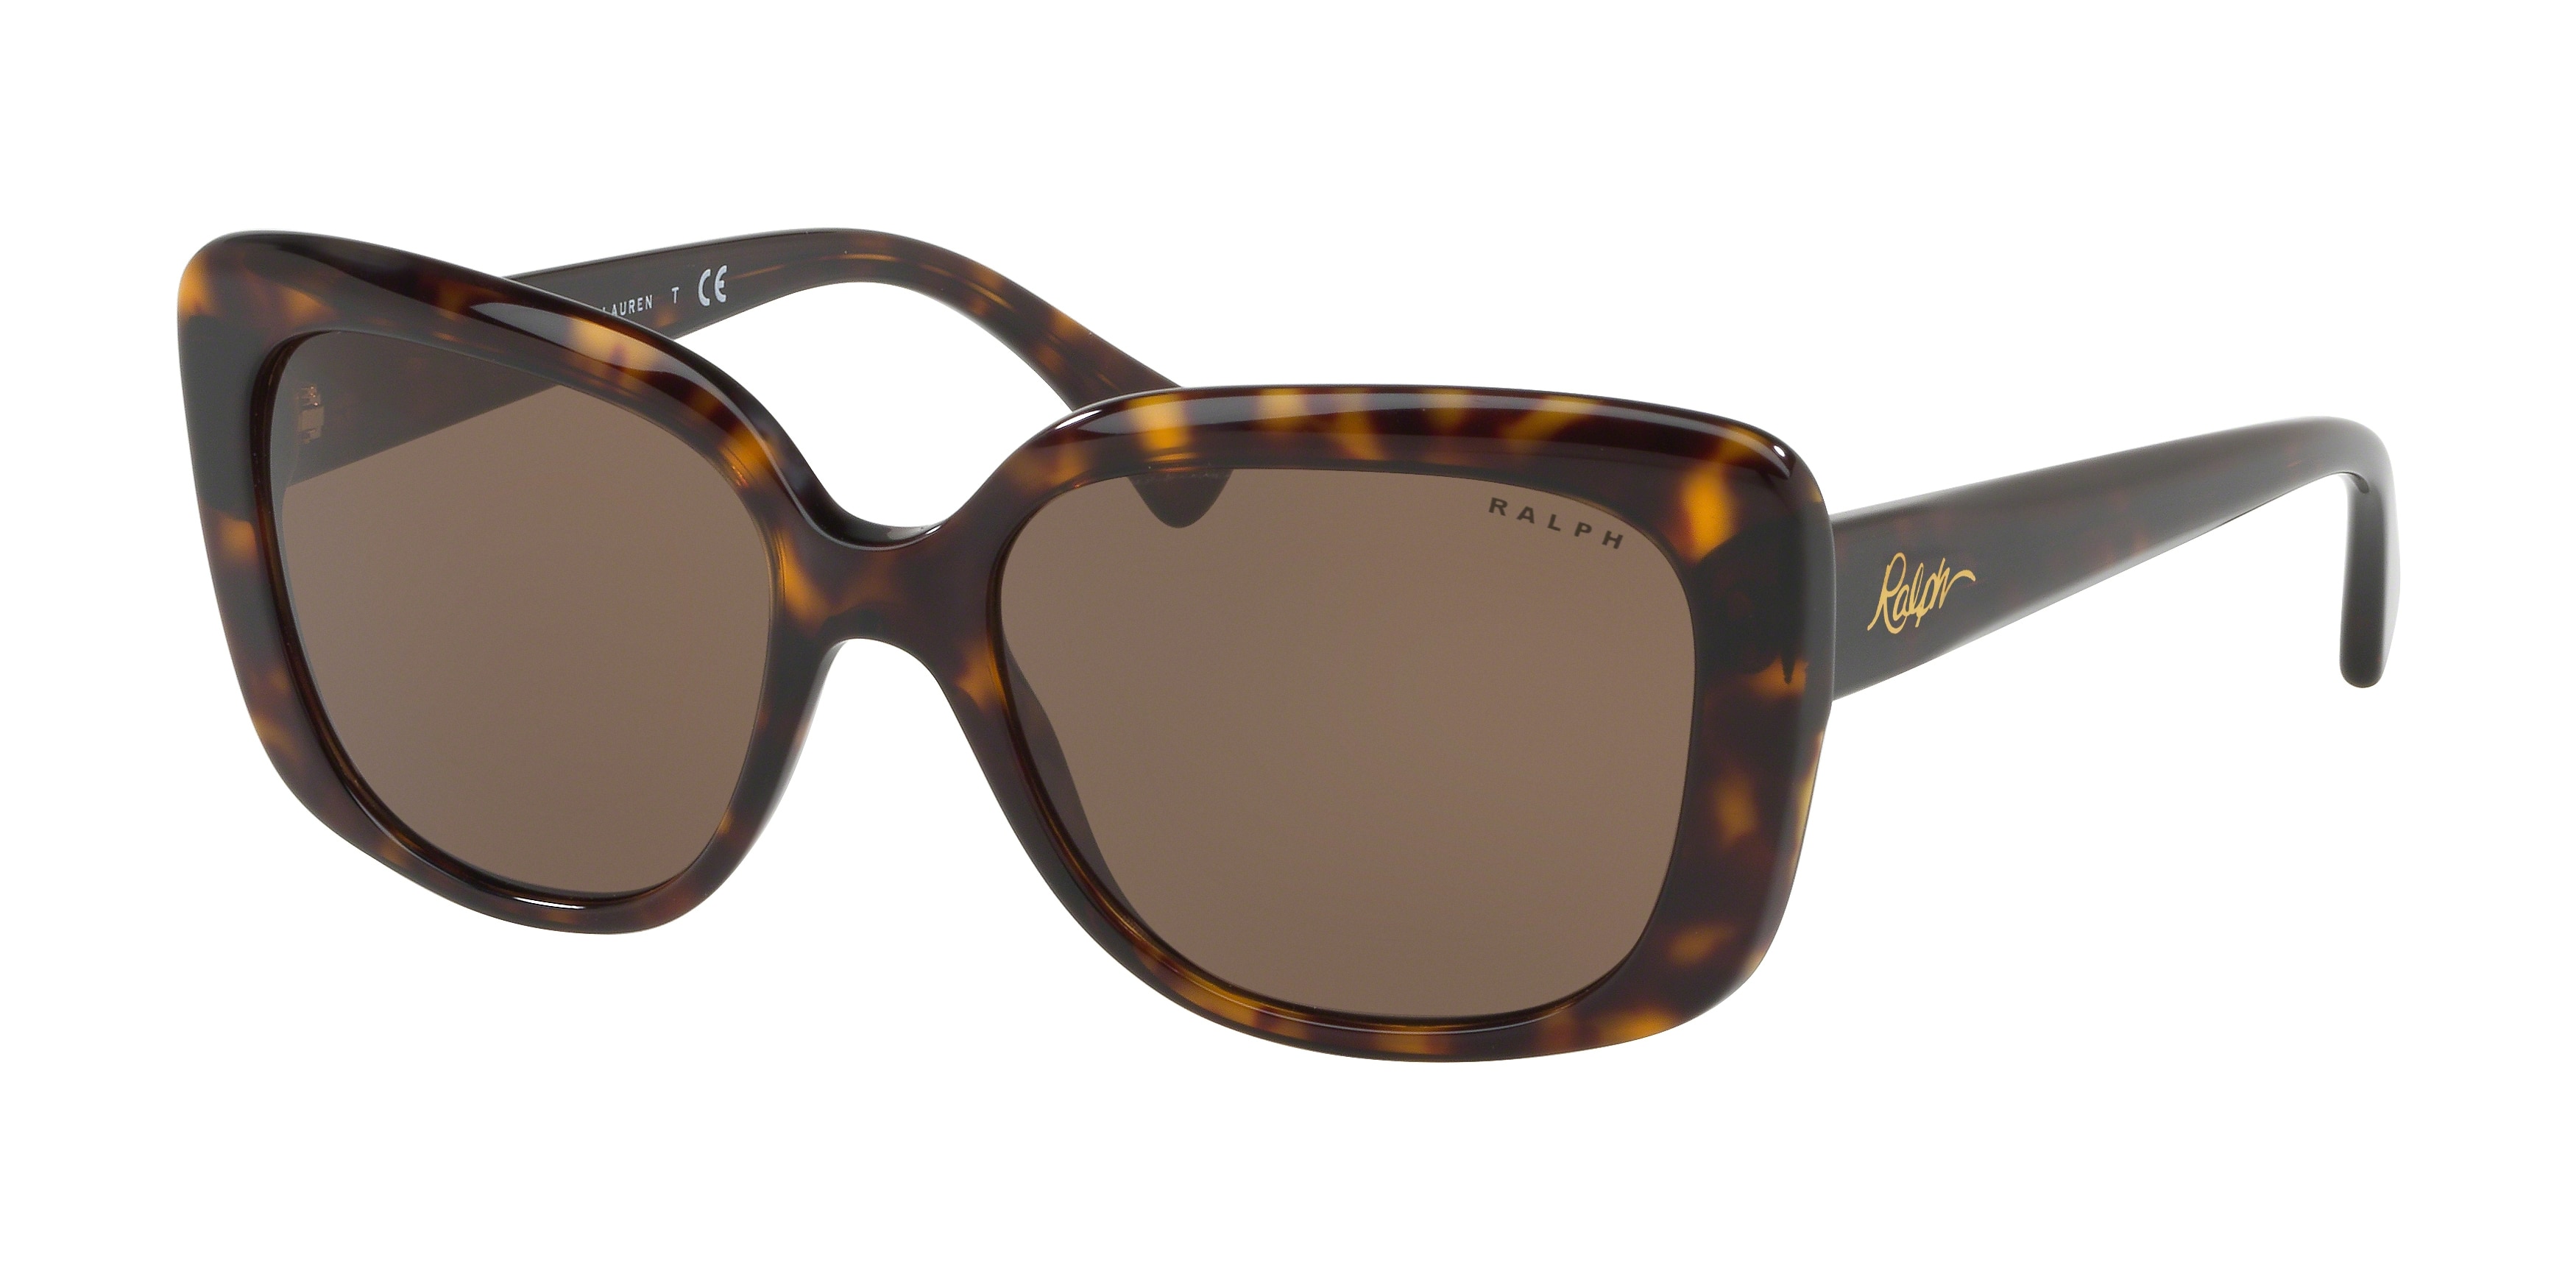 Buy Ralph Lauren Sunglasses directly from OpticsFast.com